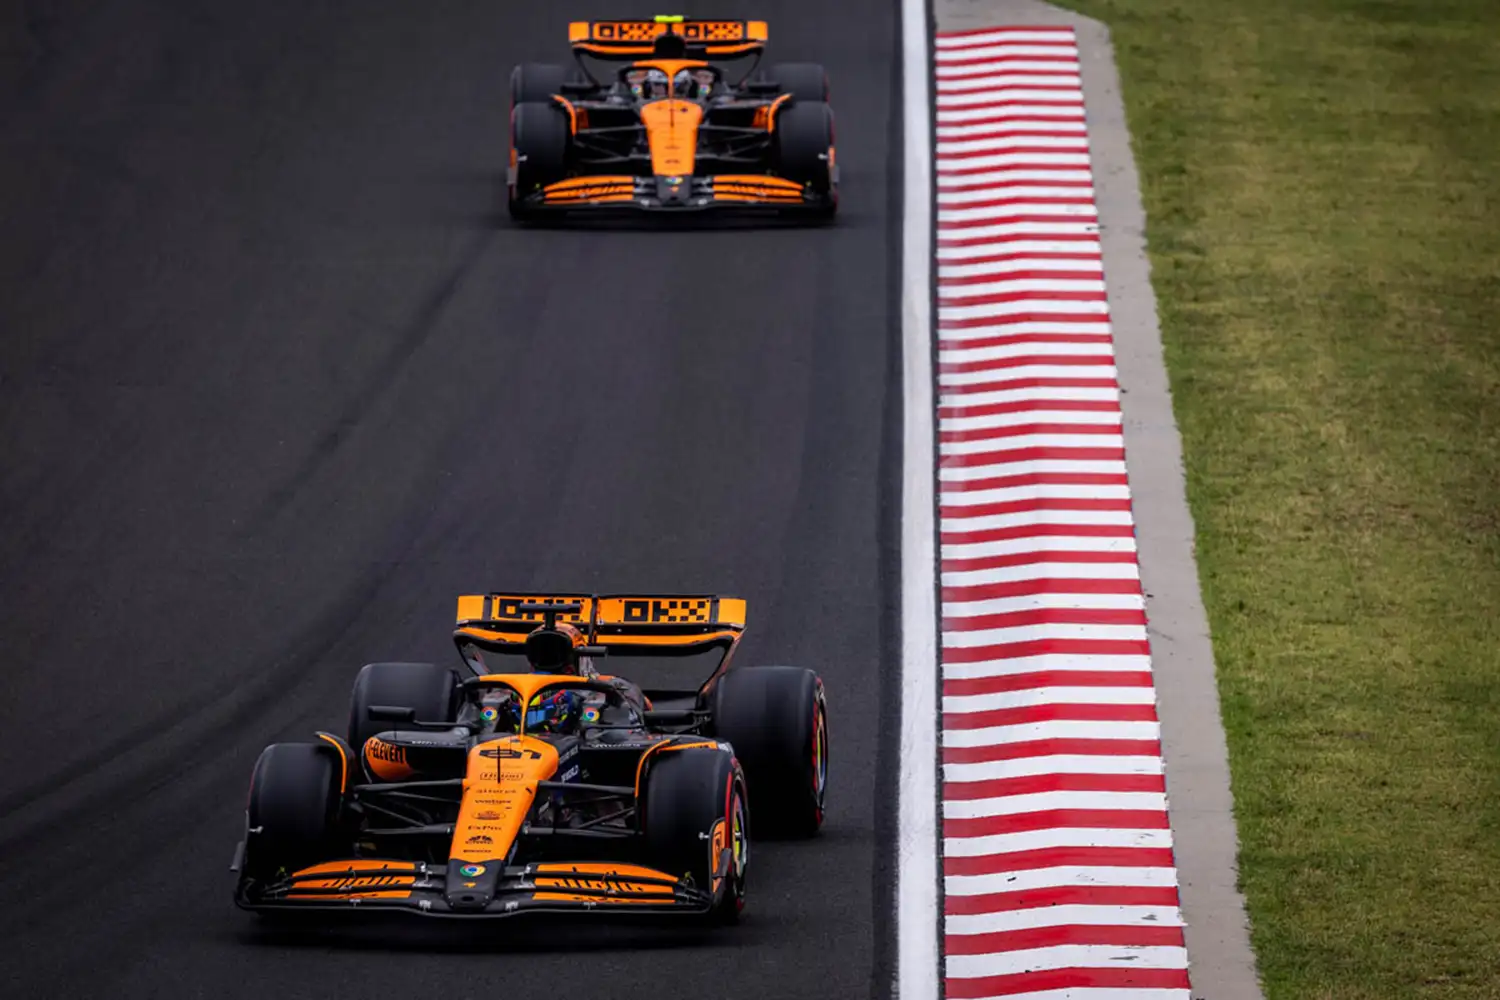 F1 – Piastri Takes First F1 Win As McLaren Seal 1-2 In Hungary Ahead Of Hamilton